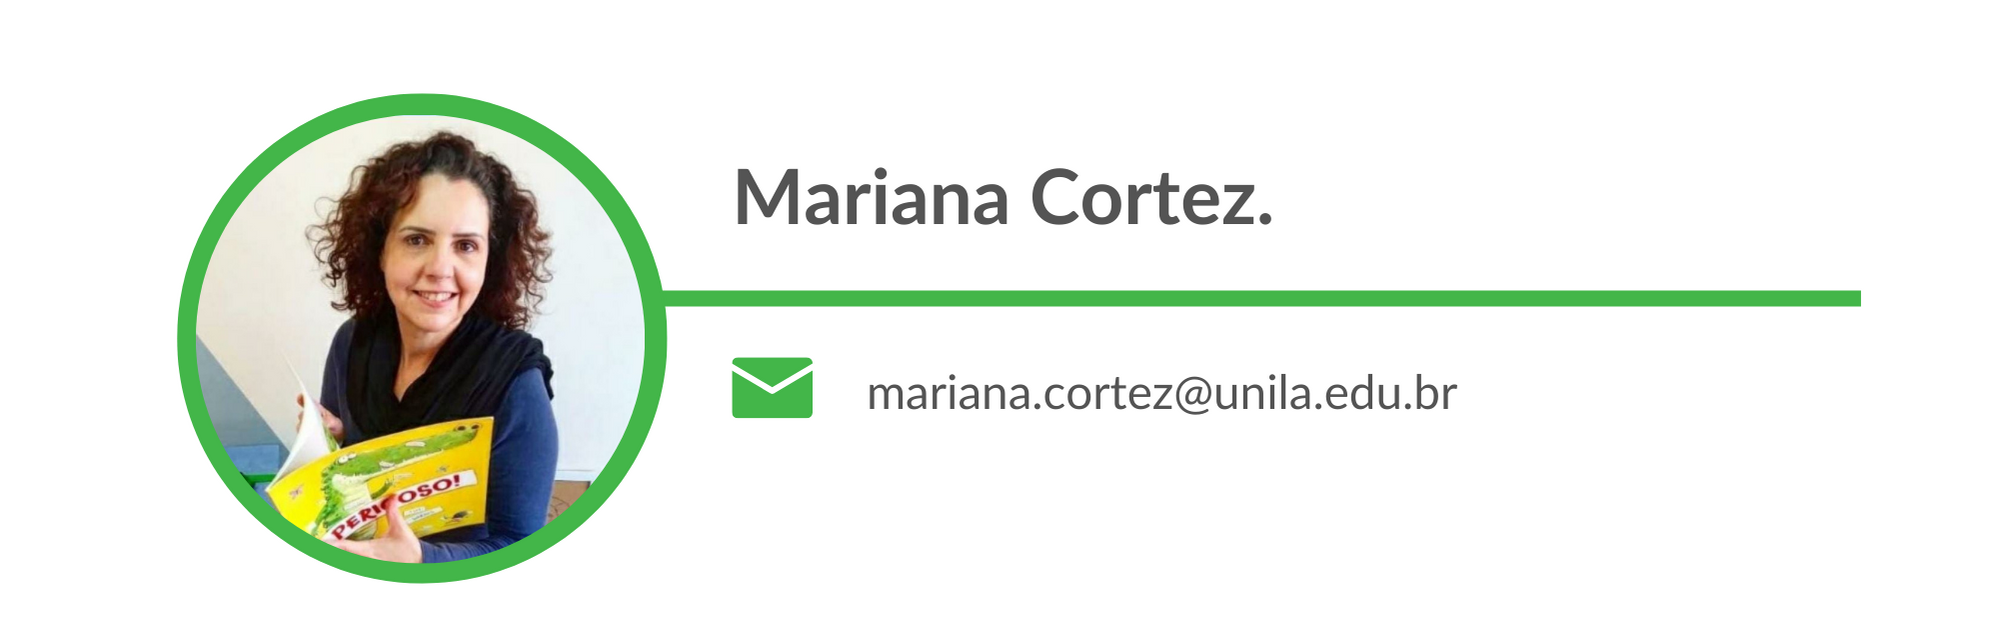 Mariana Cortez. Email: mariana.cortez@unila.edu.br